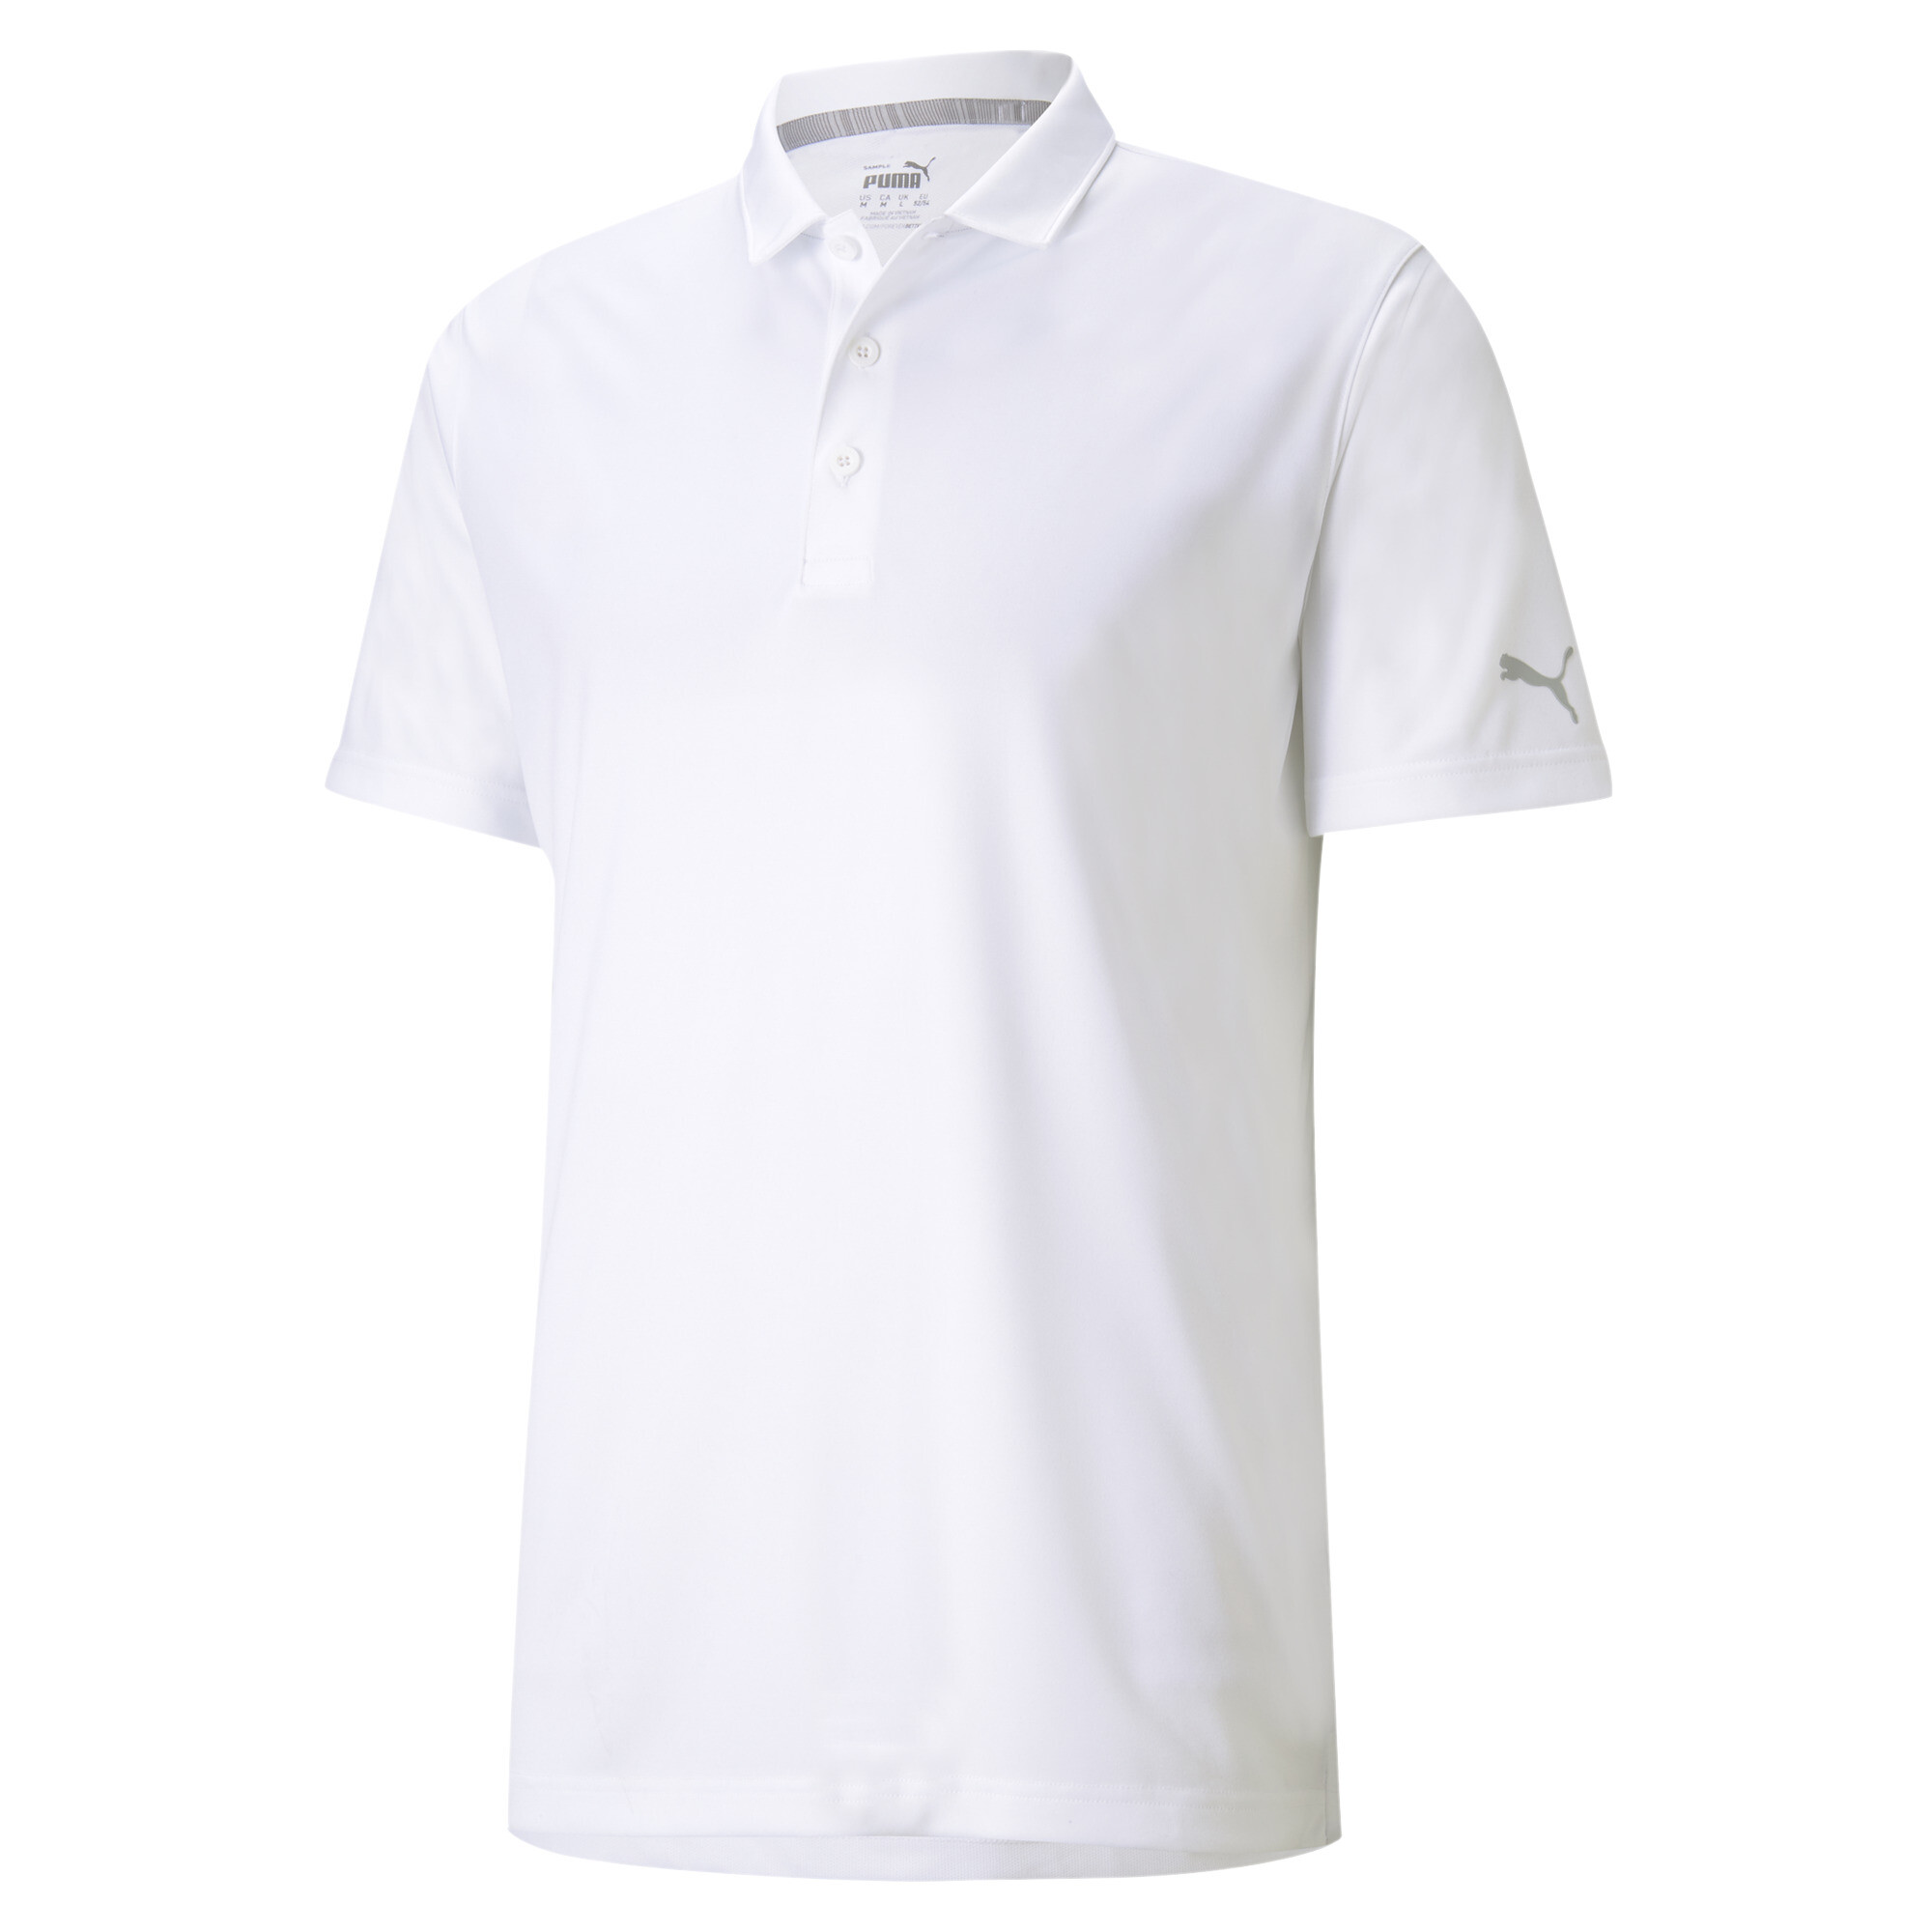 Men's Puma Gamer's Golf Polo Shirt T-Shirt, White T-Shirt, Size XXL T-Shirt, Clothing